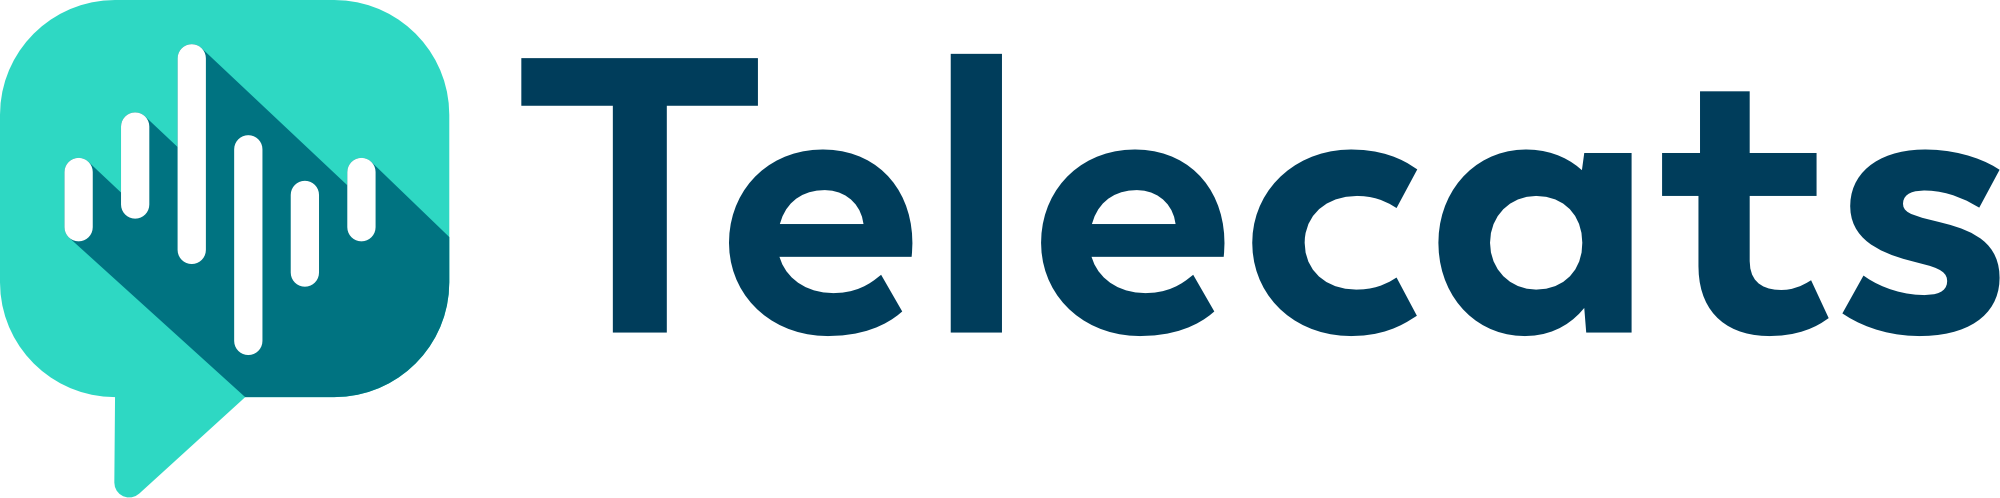 Telecats logo